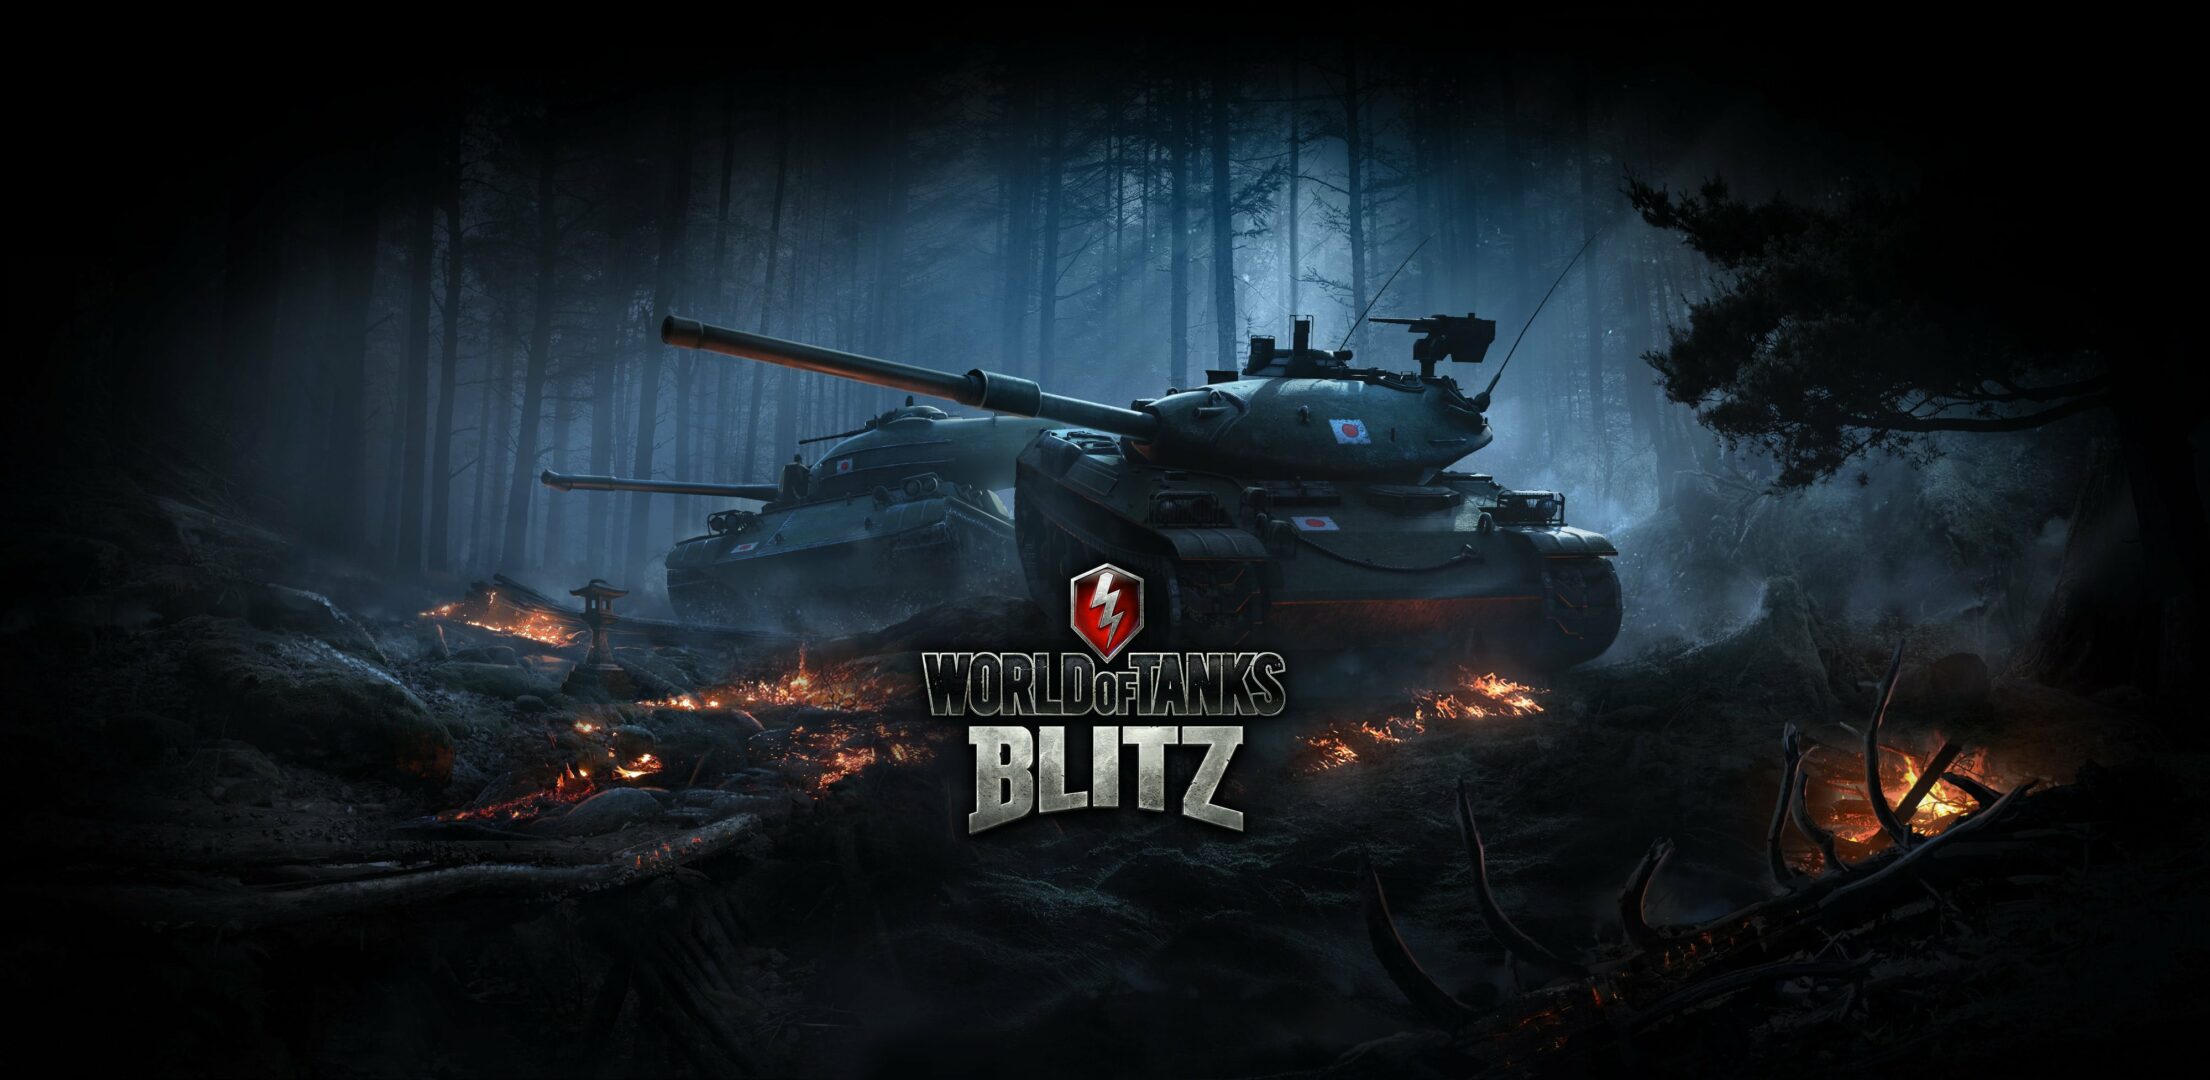 Shogun Warriors Breaks Through Players’ Line of Defense in World of Tanks Blitz